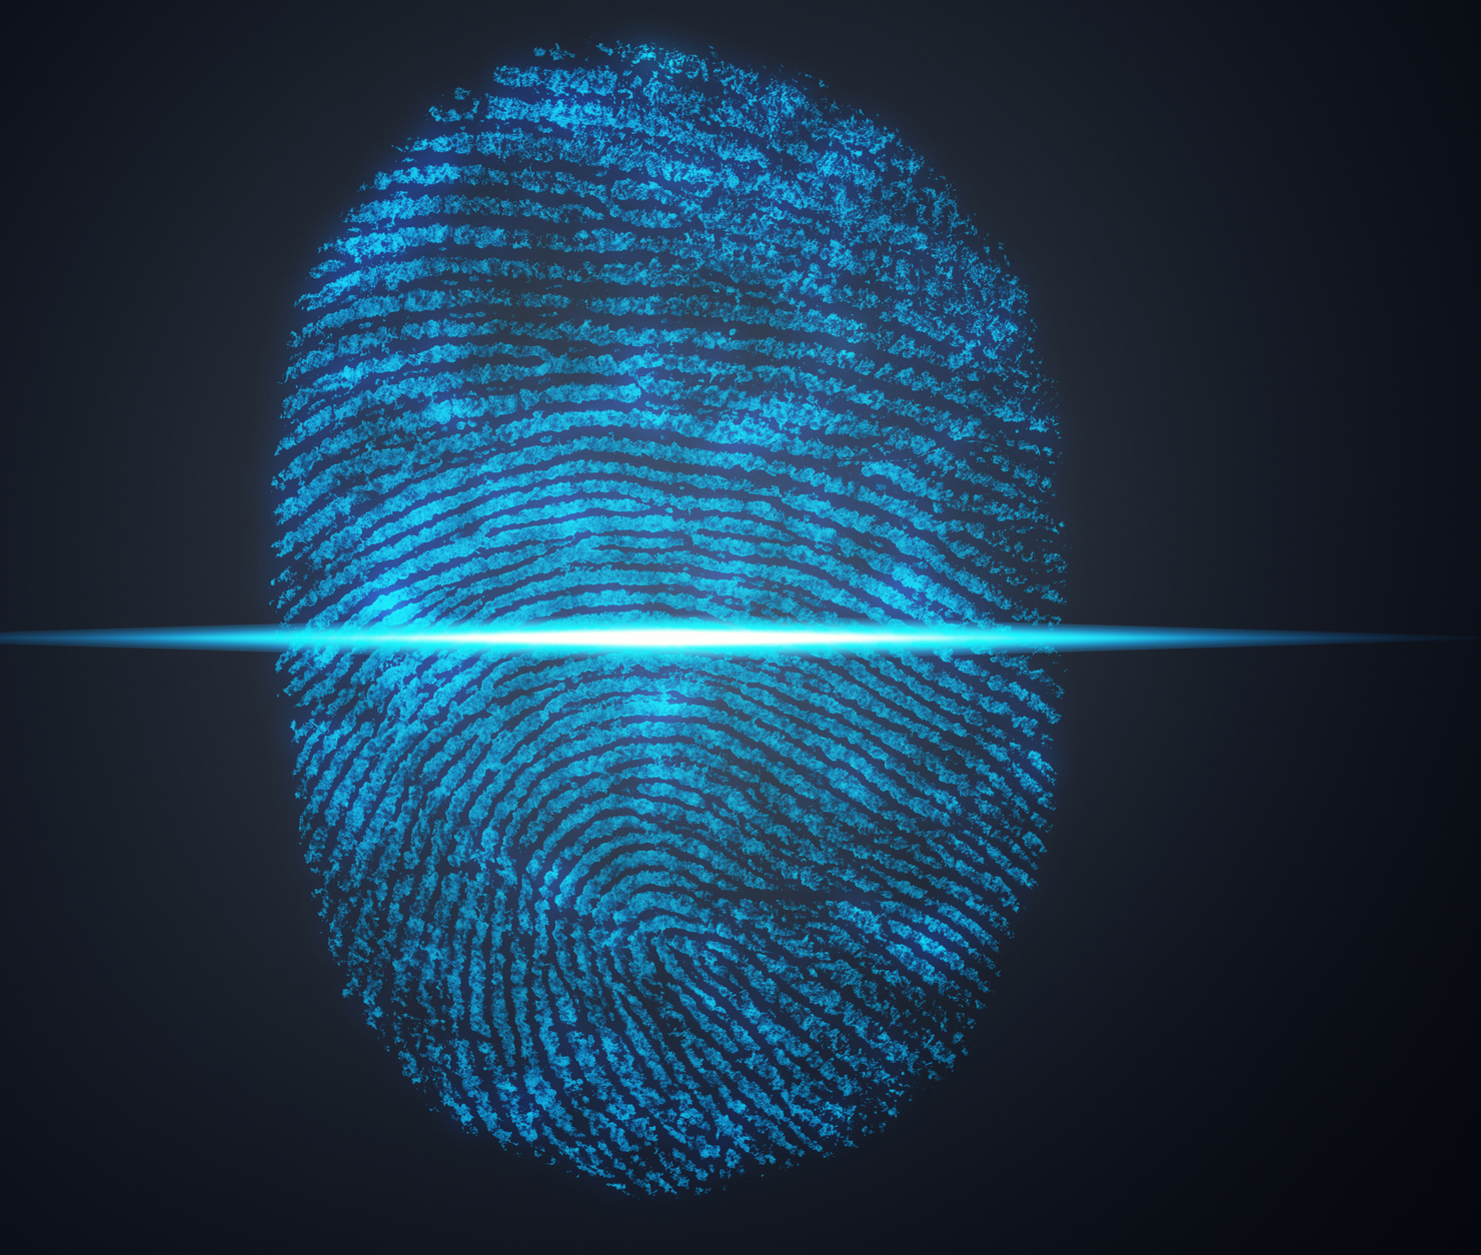 IT Biometrics